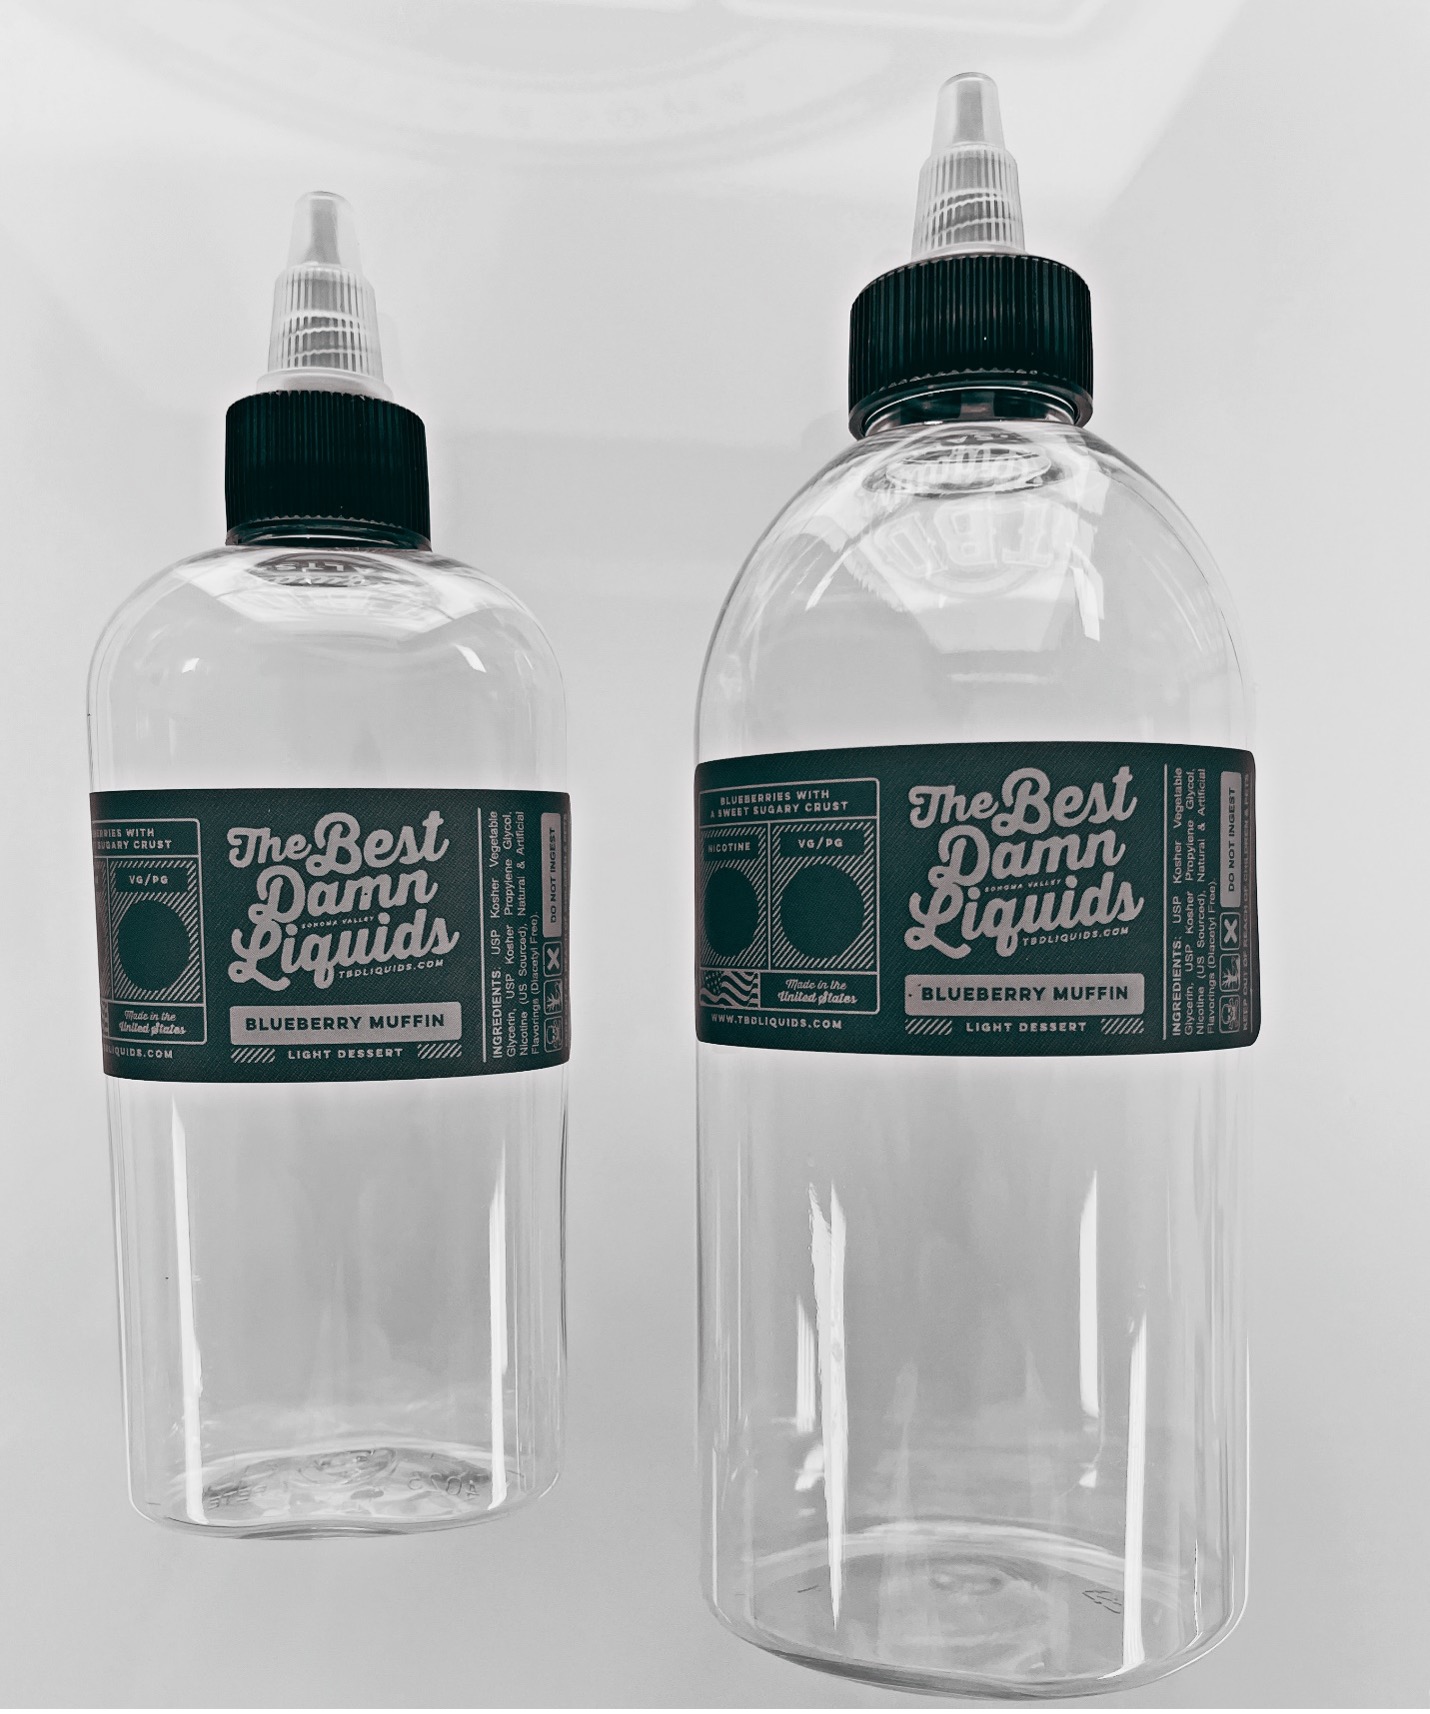 Zak Brand Water Bottles Sold At Target Recalled - CBS Detroit